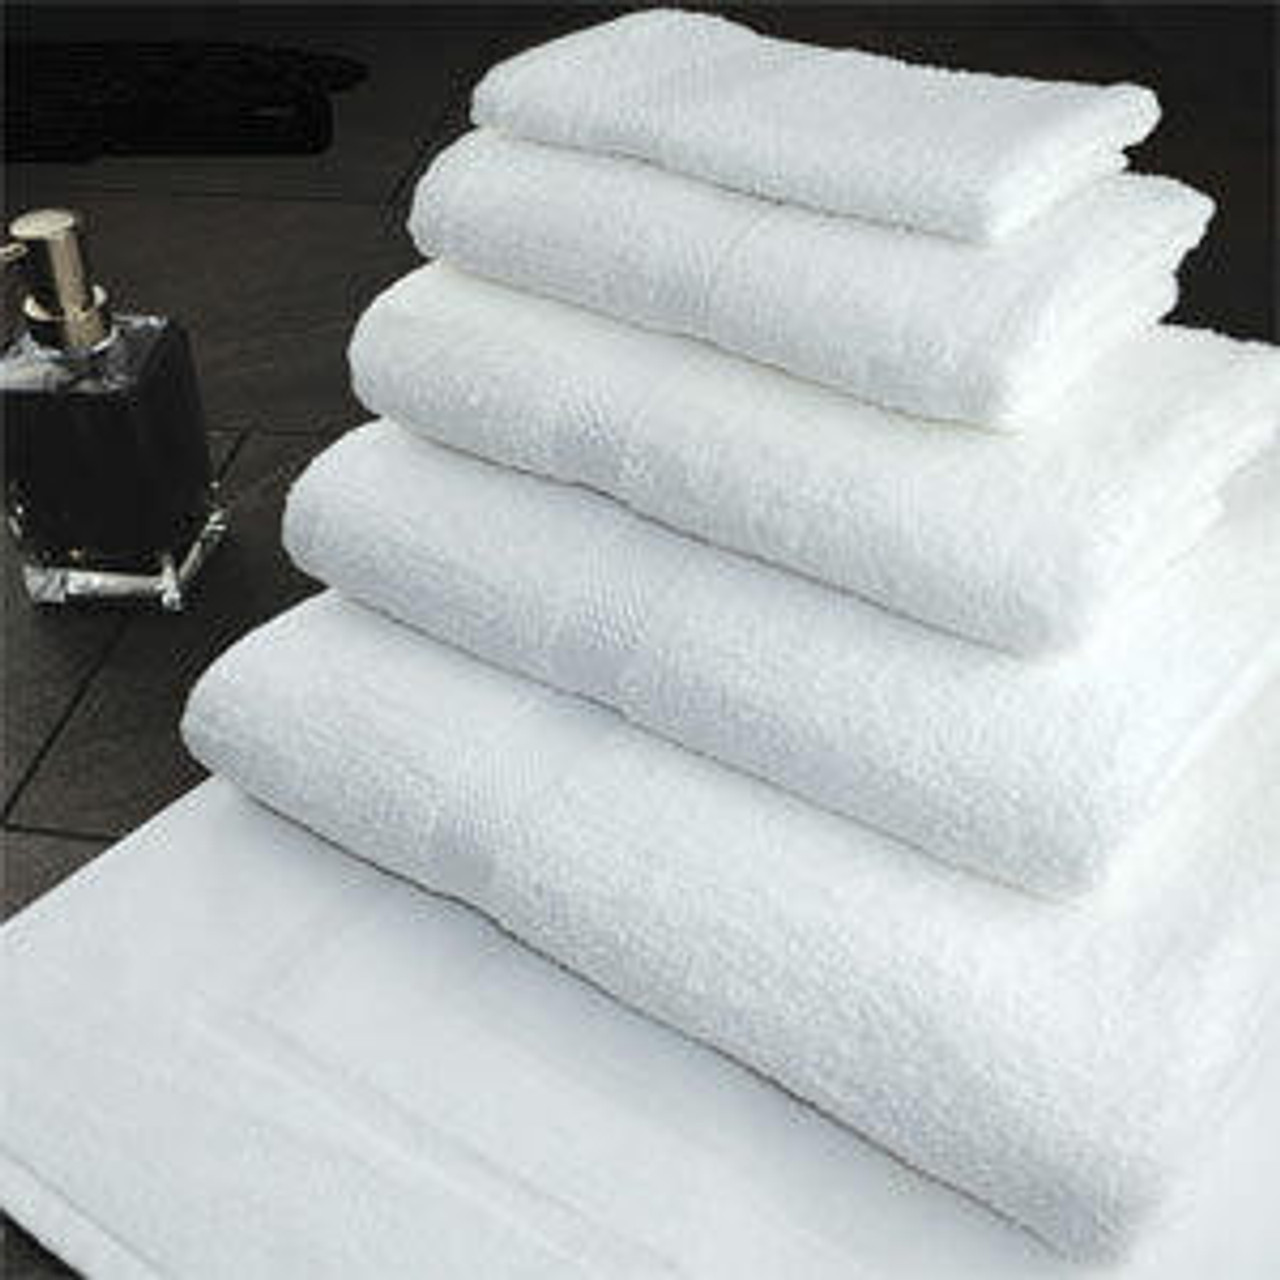 WestPoint Hospitality Martex Sovereign Dobby Border Bath Towel, 27